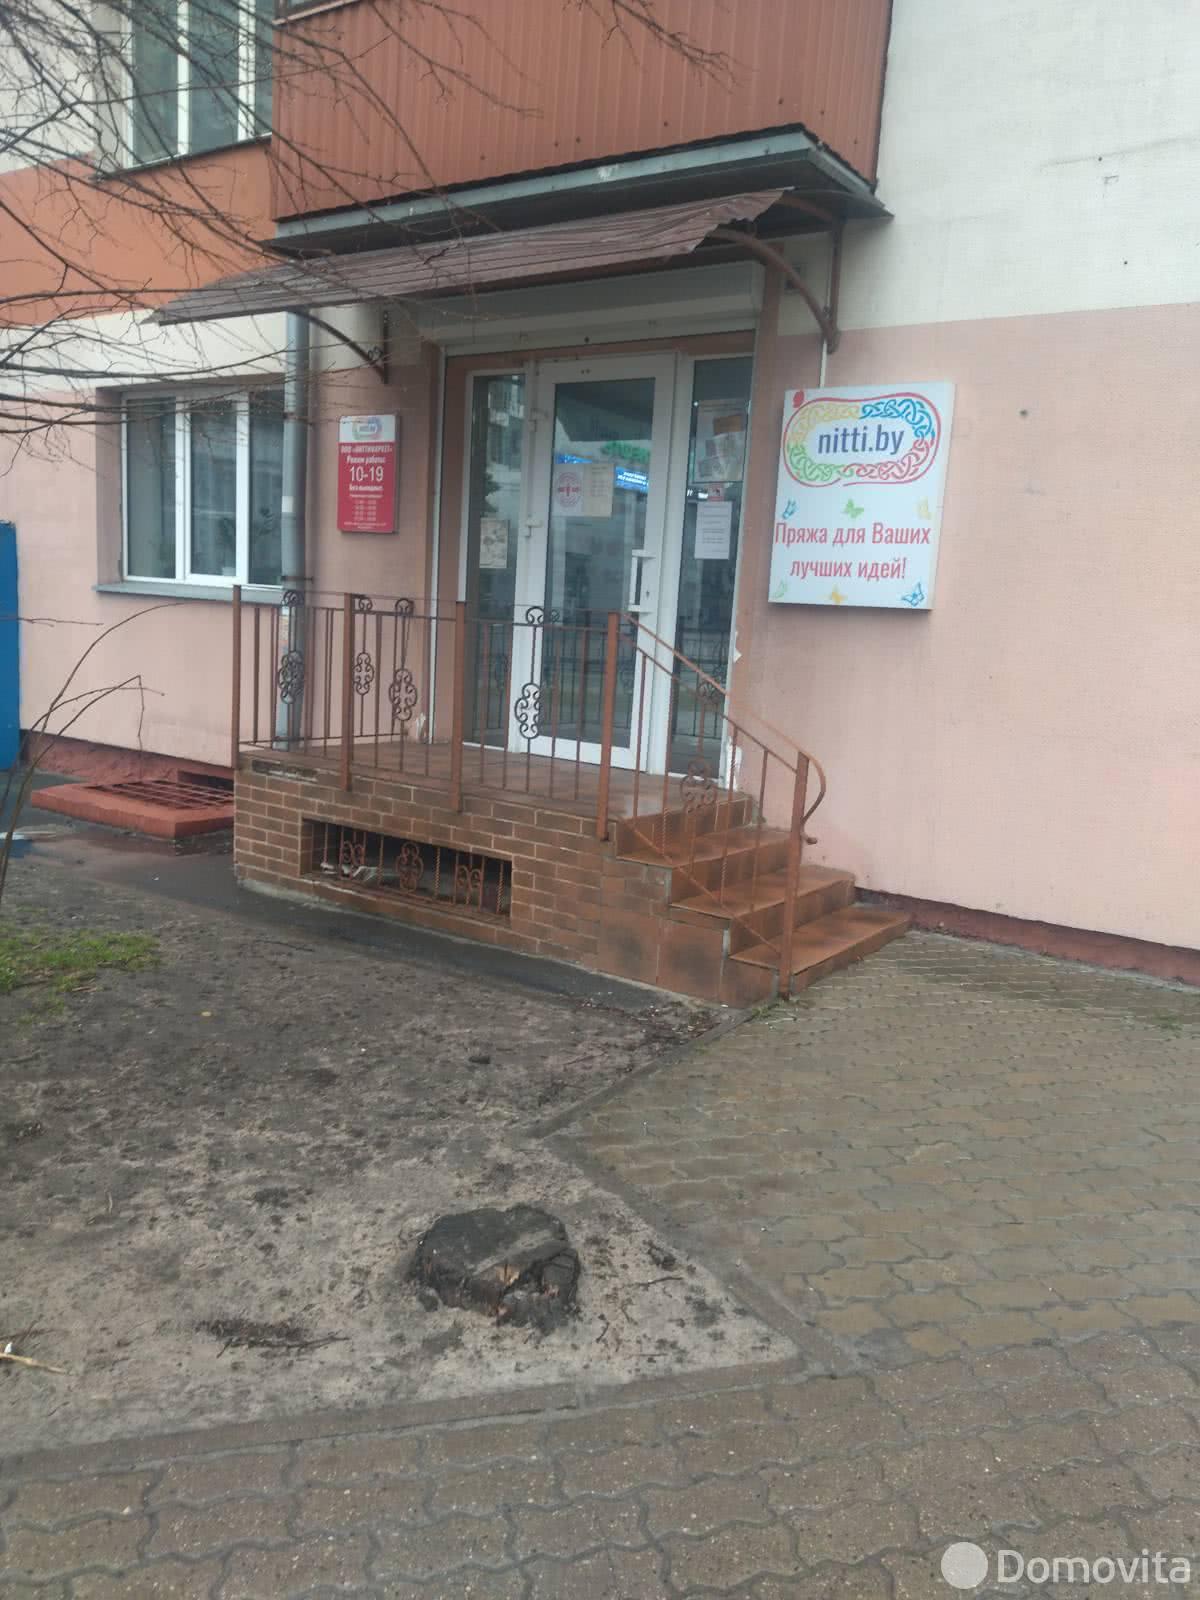 Продажа торговой точки на ул. Кирова, д. 46 в Гомеле, 51000USD - фото 2